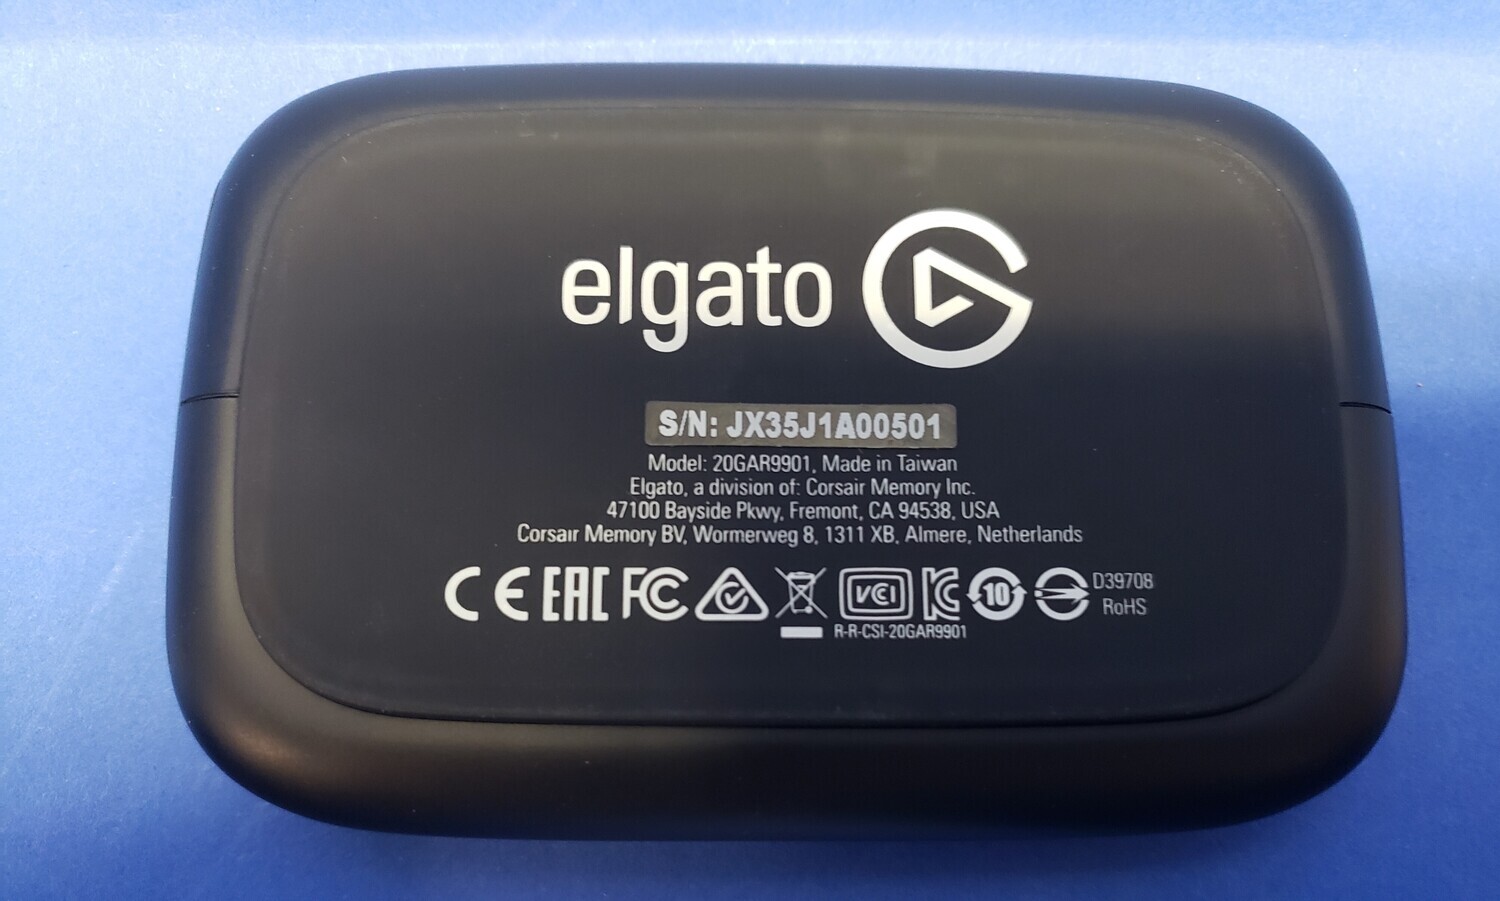 ELGATO HD60 S+ 20GAR9901 CAPTURE CARD 1080p60 HDR10 CAPTURE 4K60 HDR10 ZERO- LAG PASS THROUGH, ULTRA-